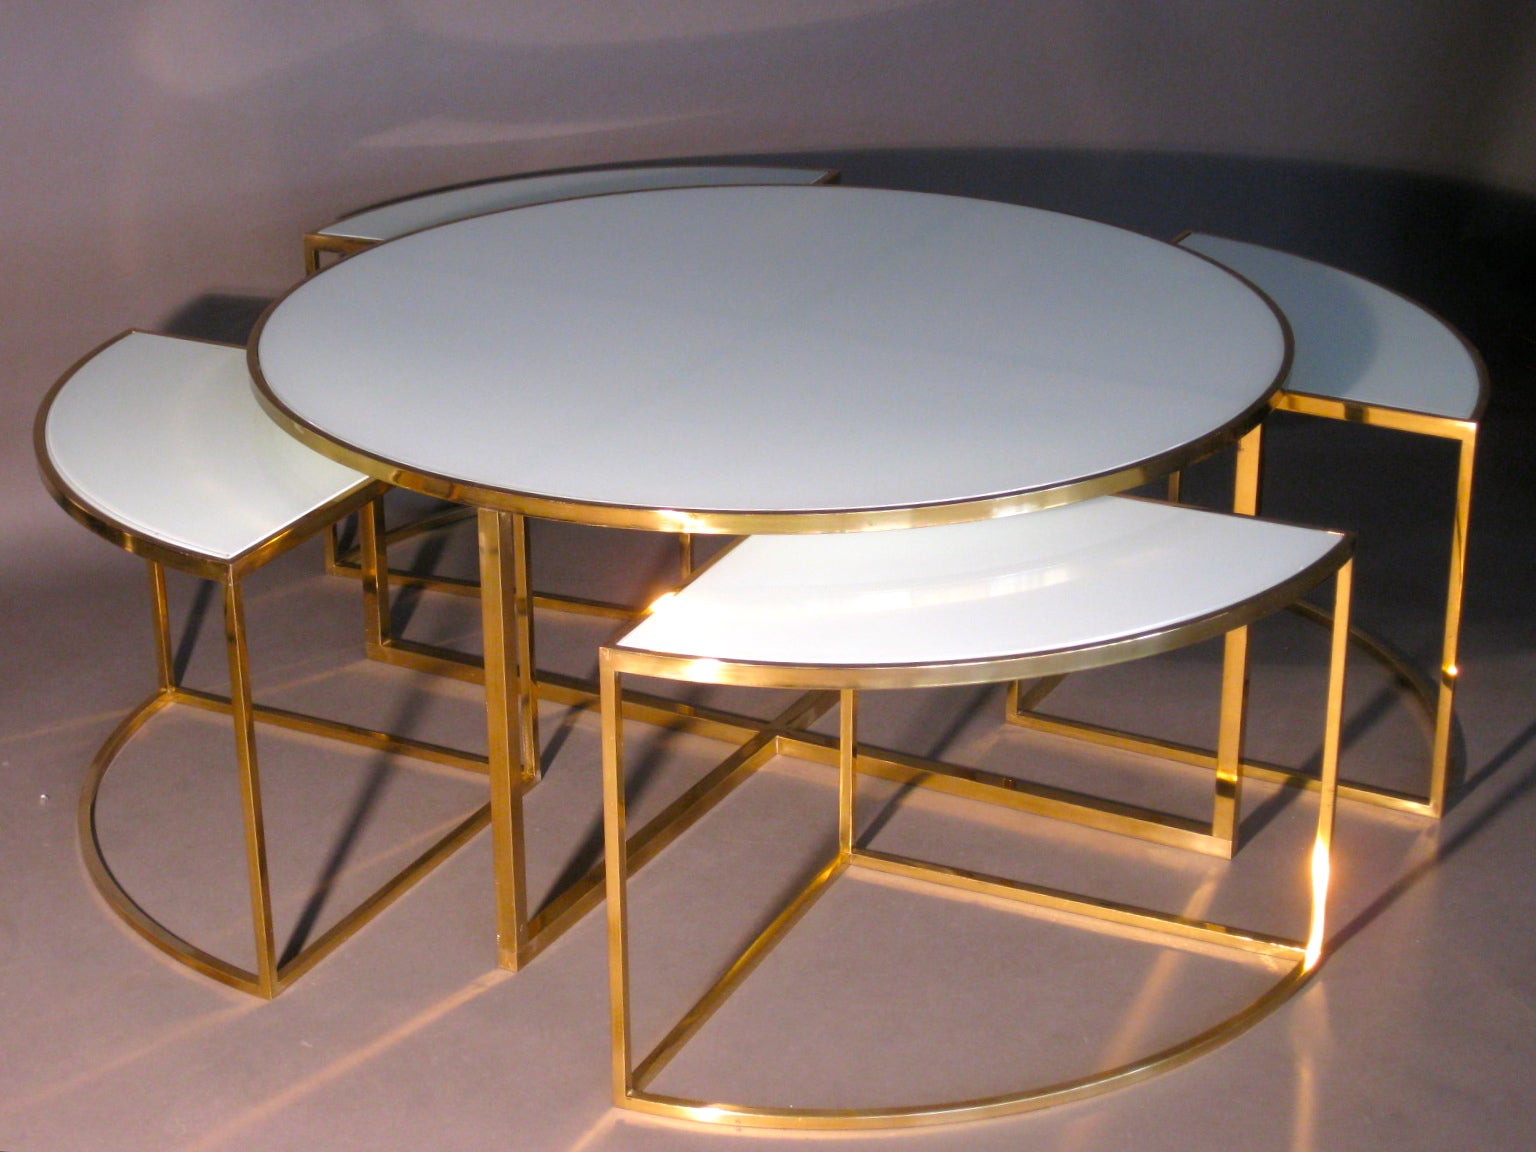 Brass & Glass Coffee Table w/ Four Nesting Tables Set c.1960s